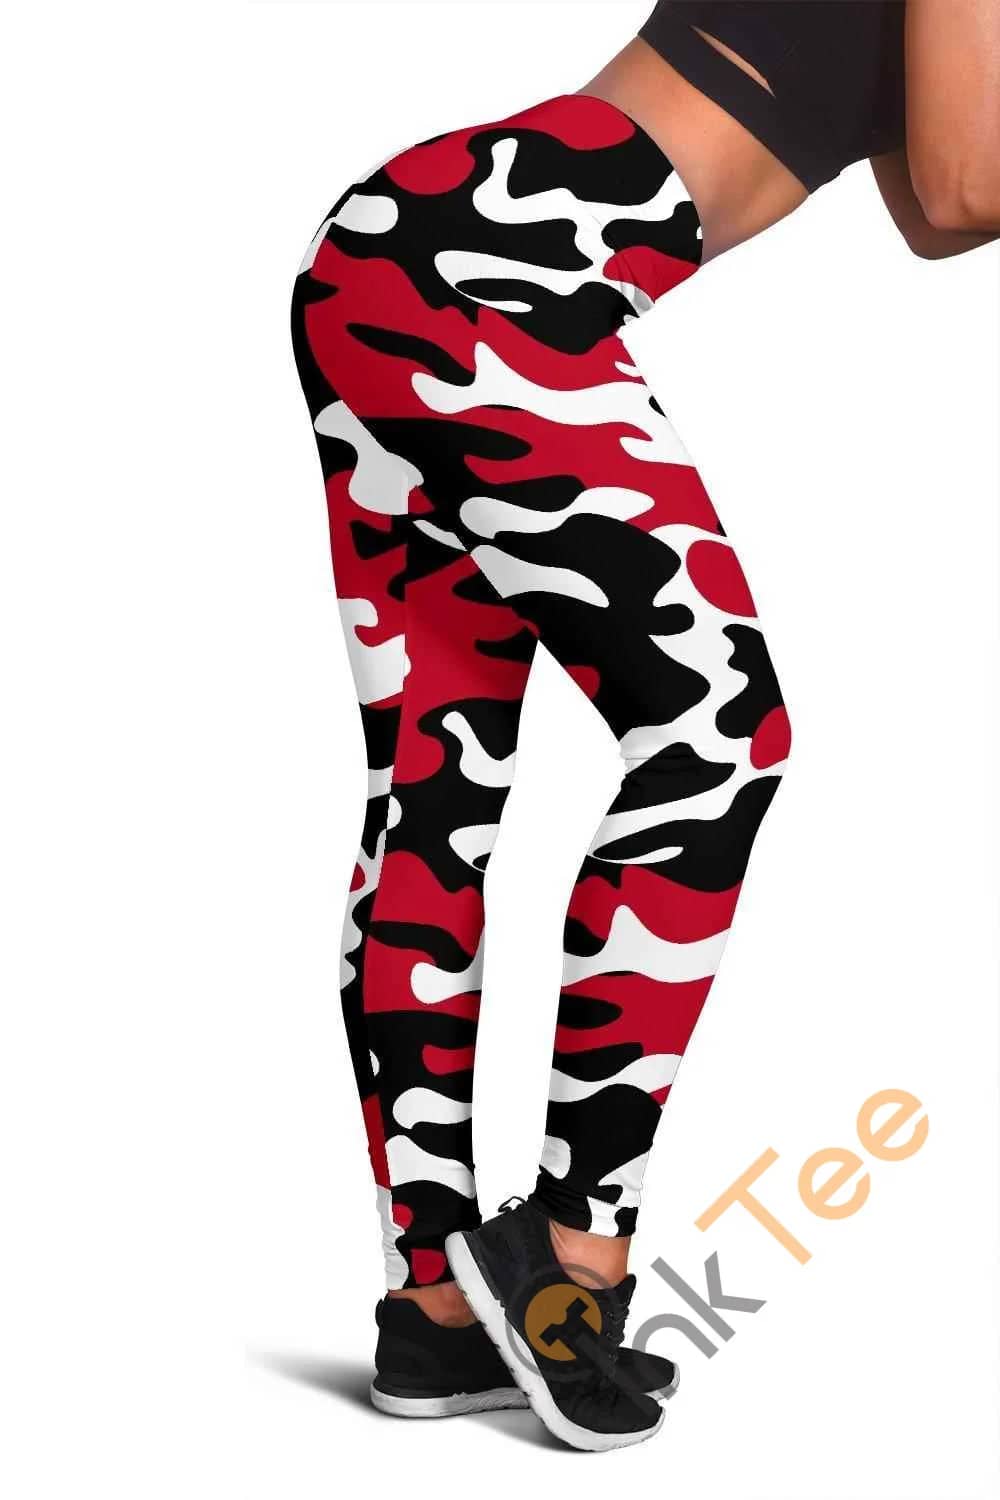 Atlanta Falcons Inspired Tru Camo 3D All Over Print For Yoga Fitness Fashion Women's Leggings